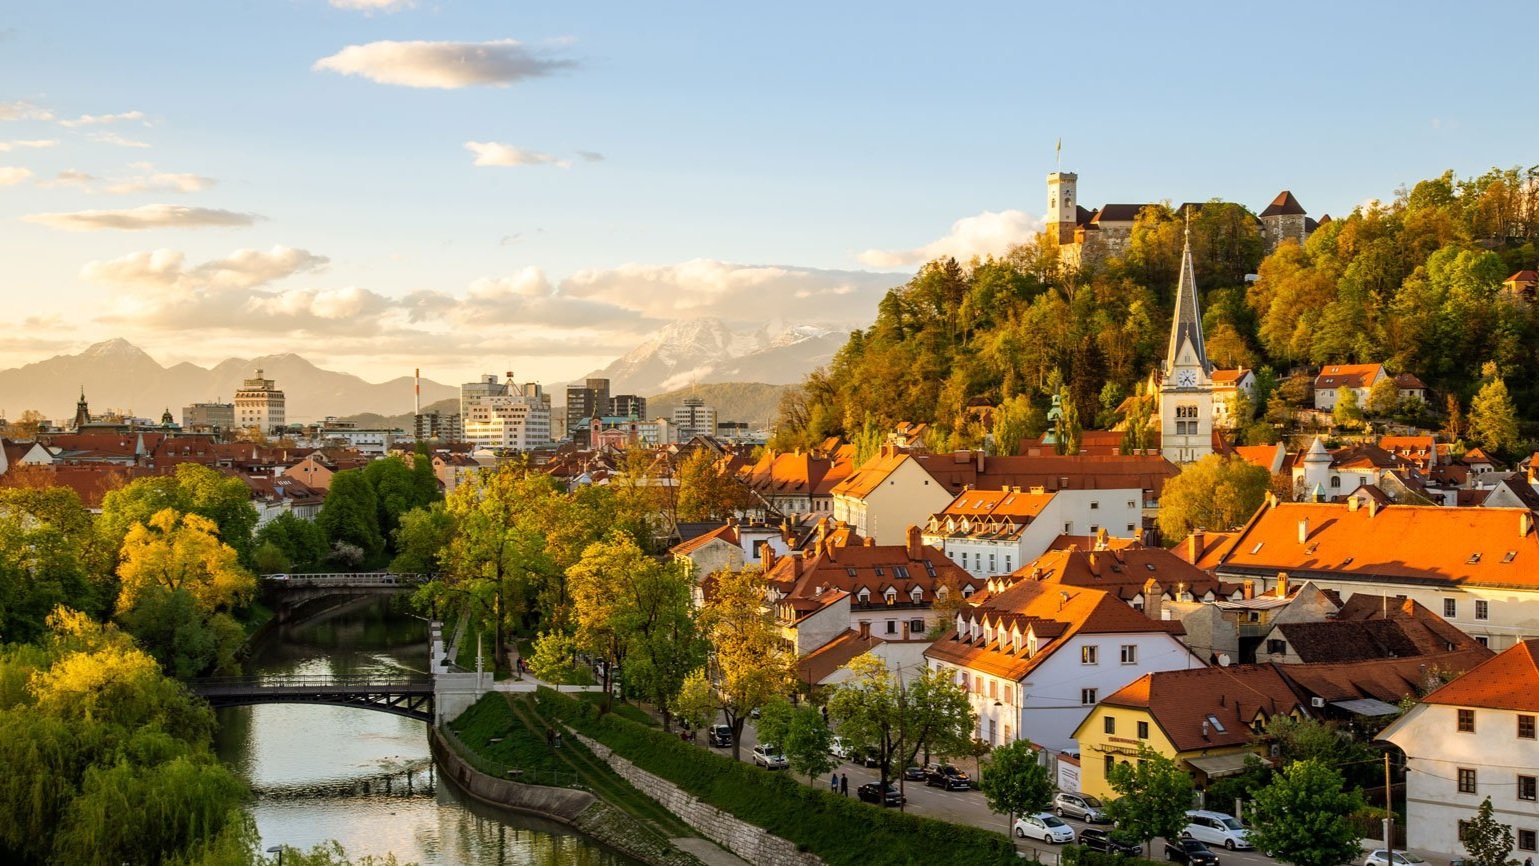 Ljubljana, an elegant and underrated provincial capital of Slovenia